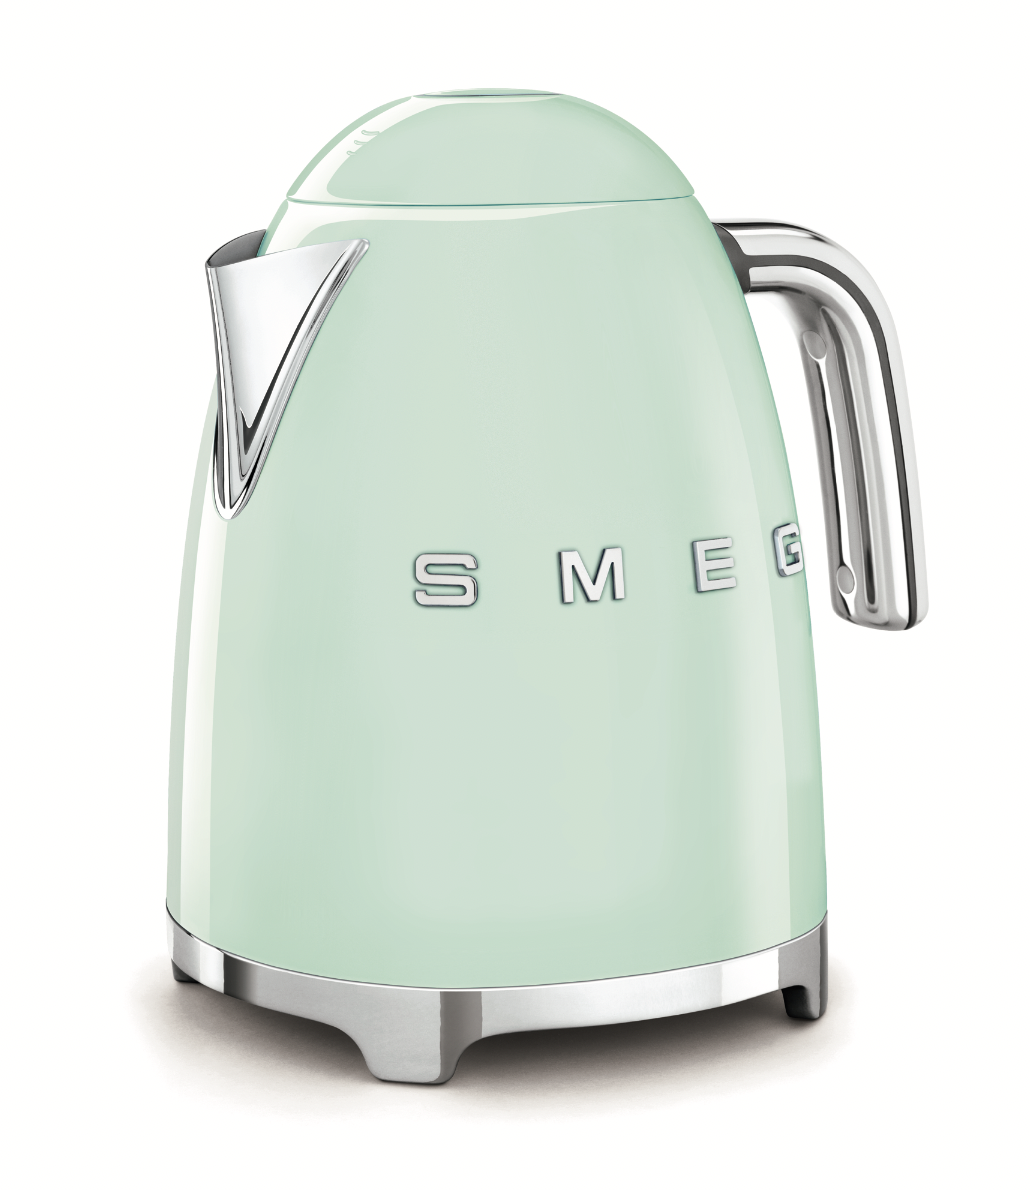 SMEG Wasserkocher - Toaster Set Pastellgrün